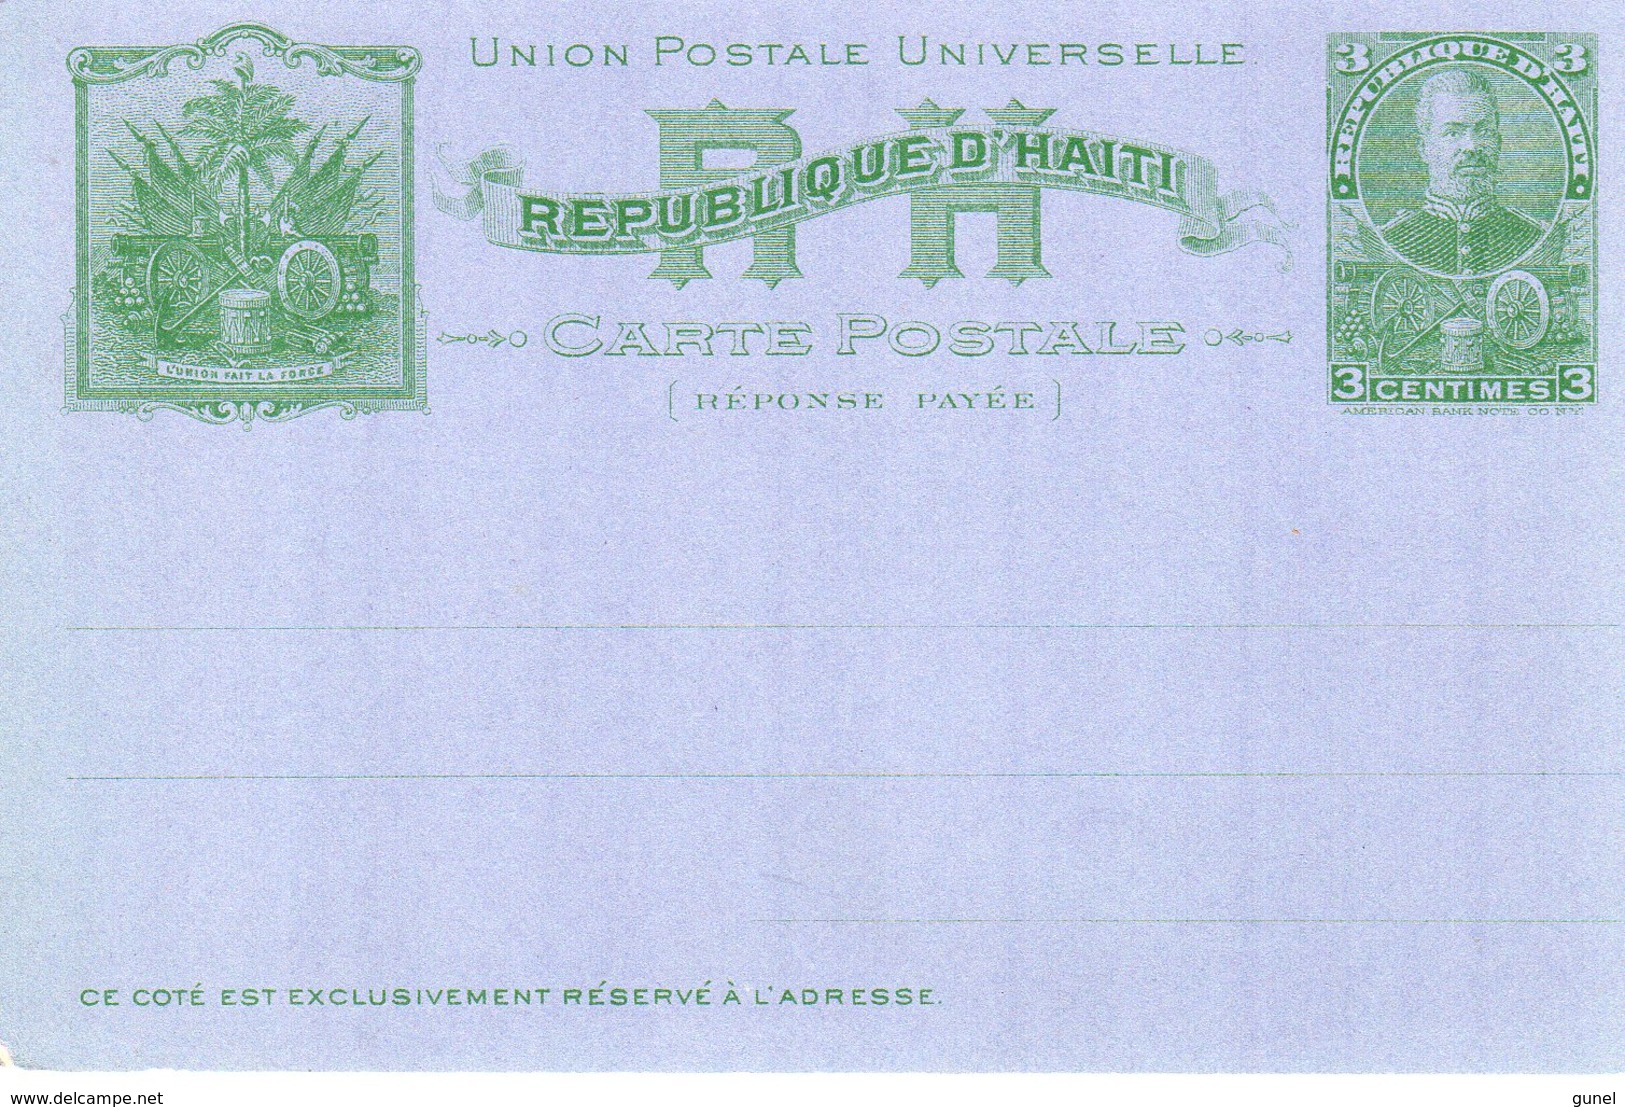 Carta Postale 3 Centimes  Reponse Payee Ongebruikt - Haïti